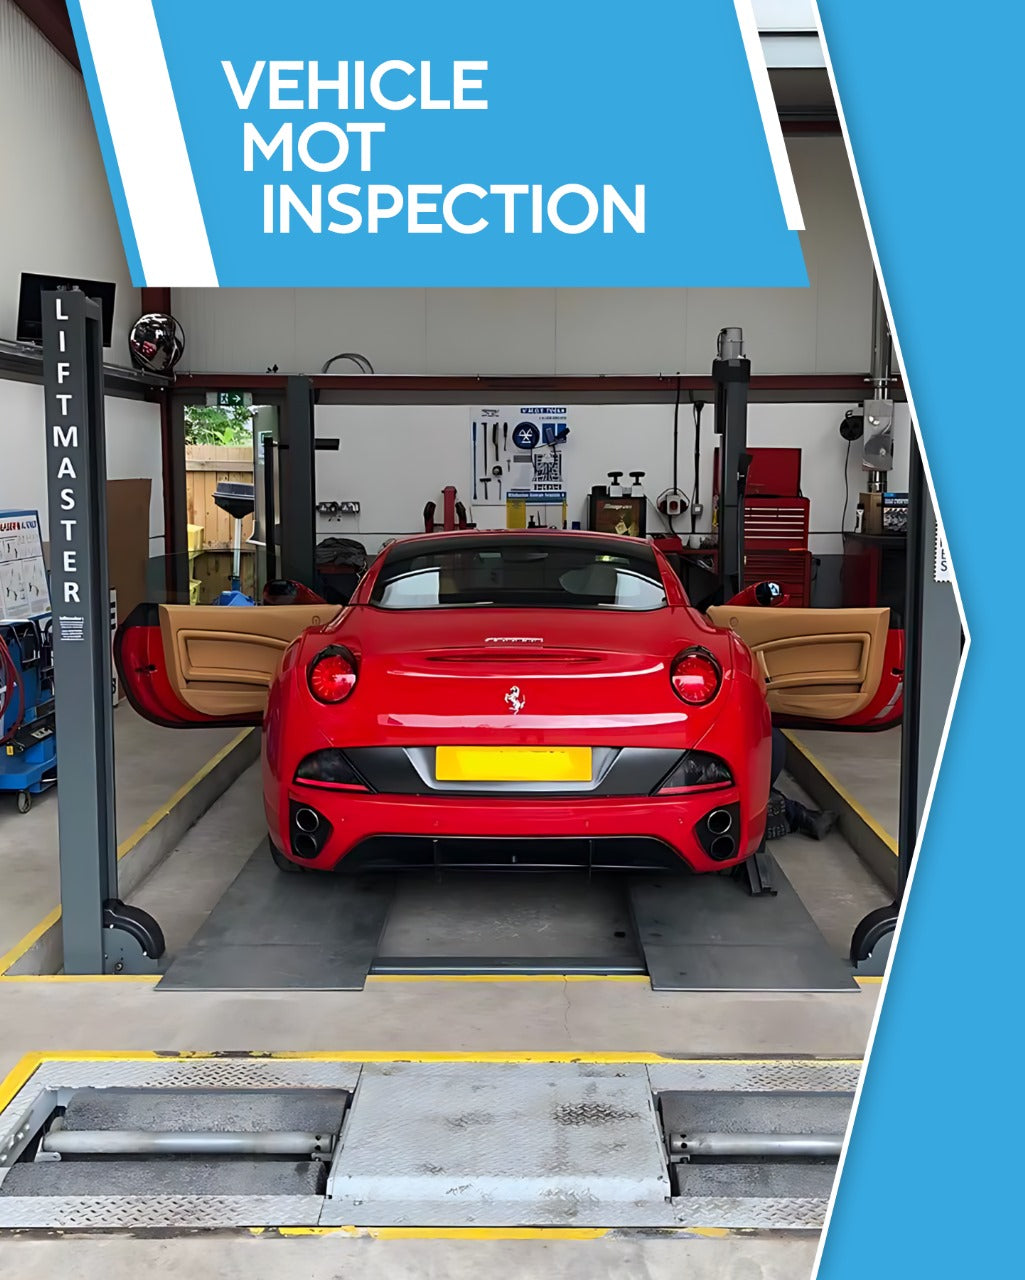 Vehicle MOT Inspection